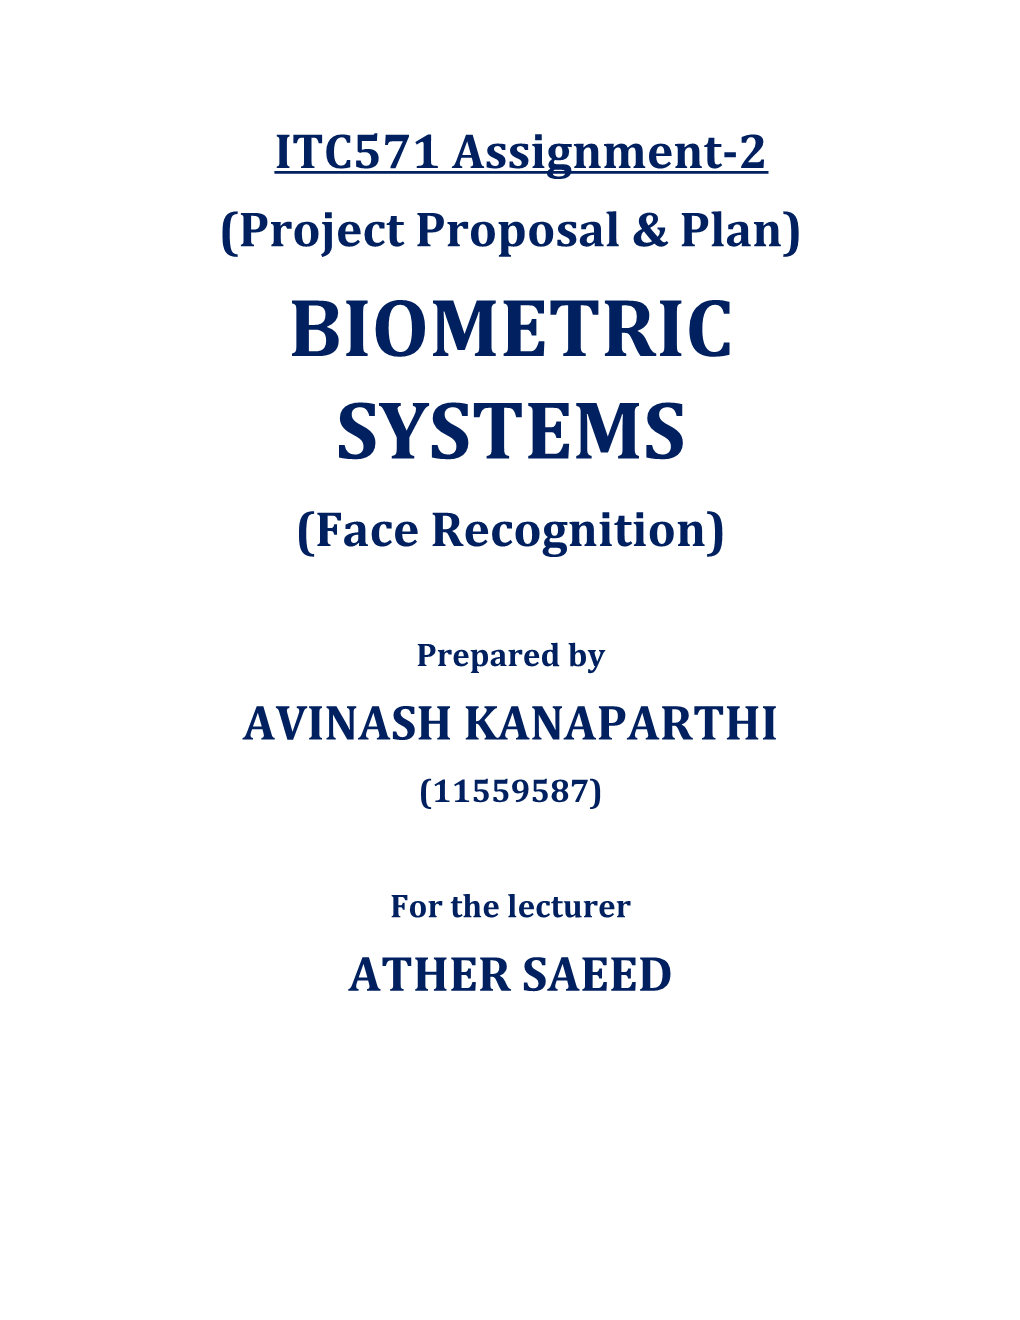 Project Proposal & Plan